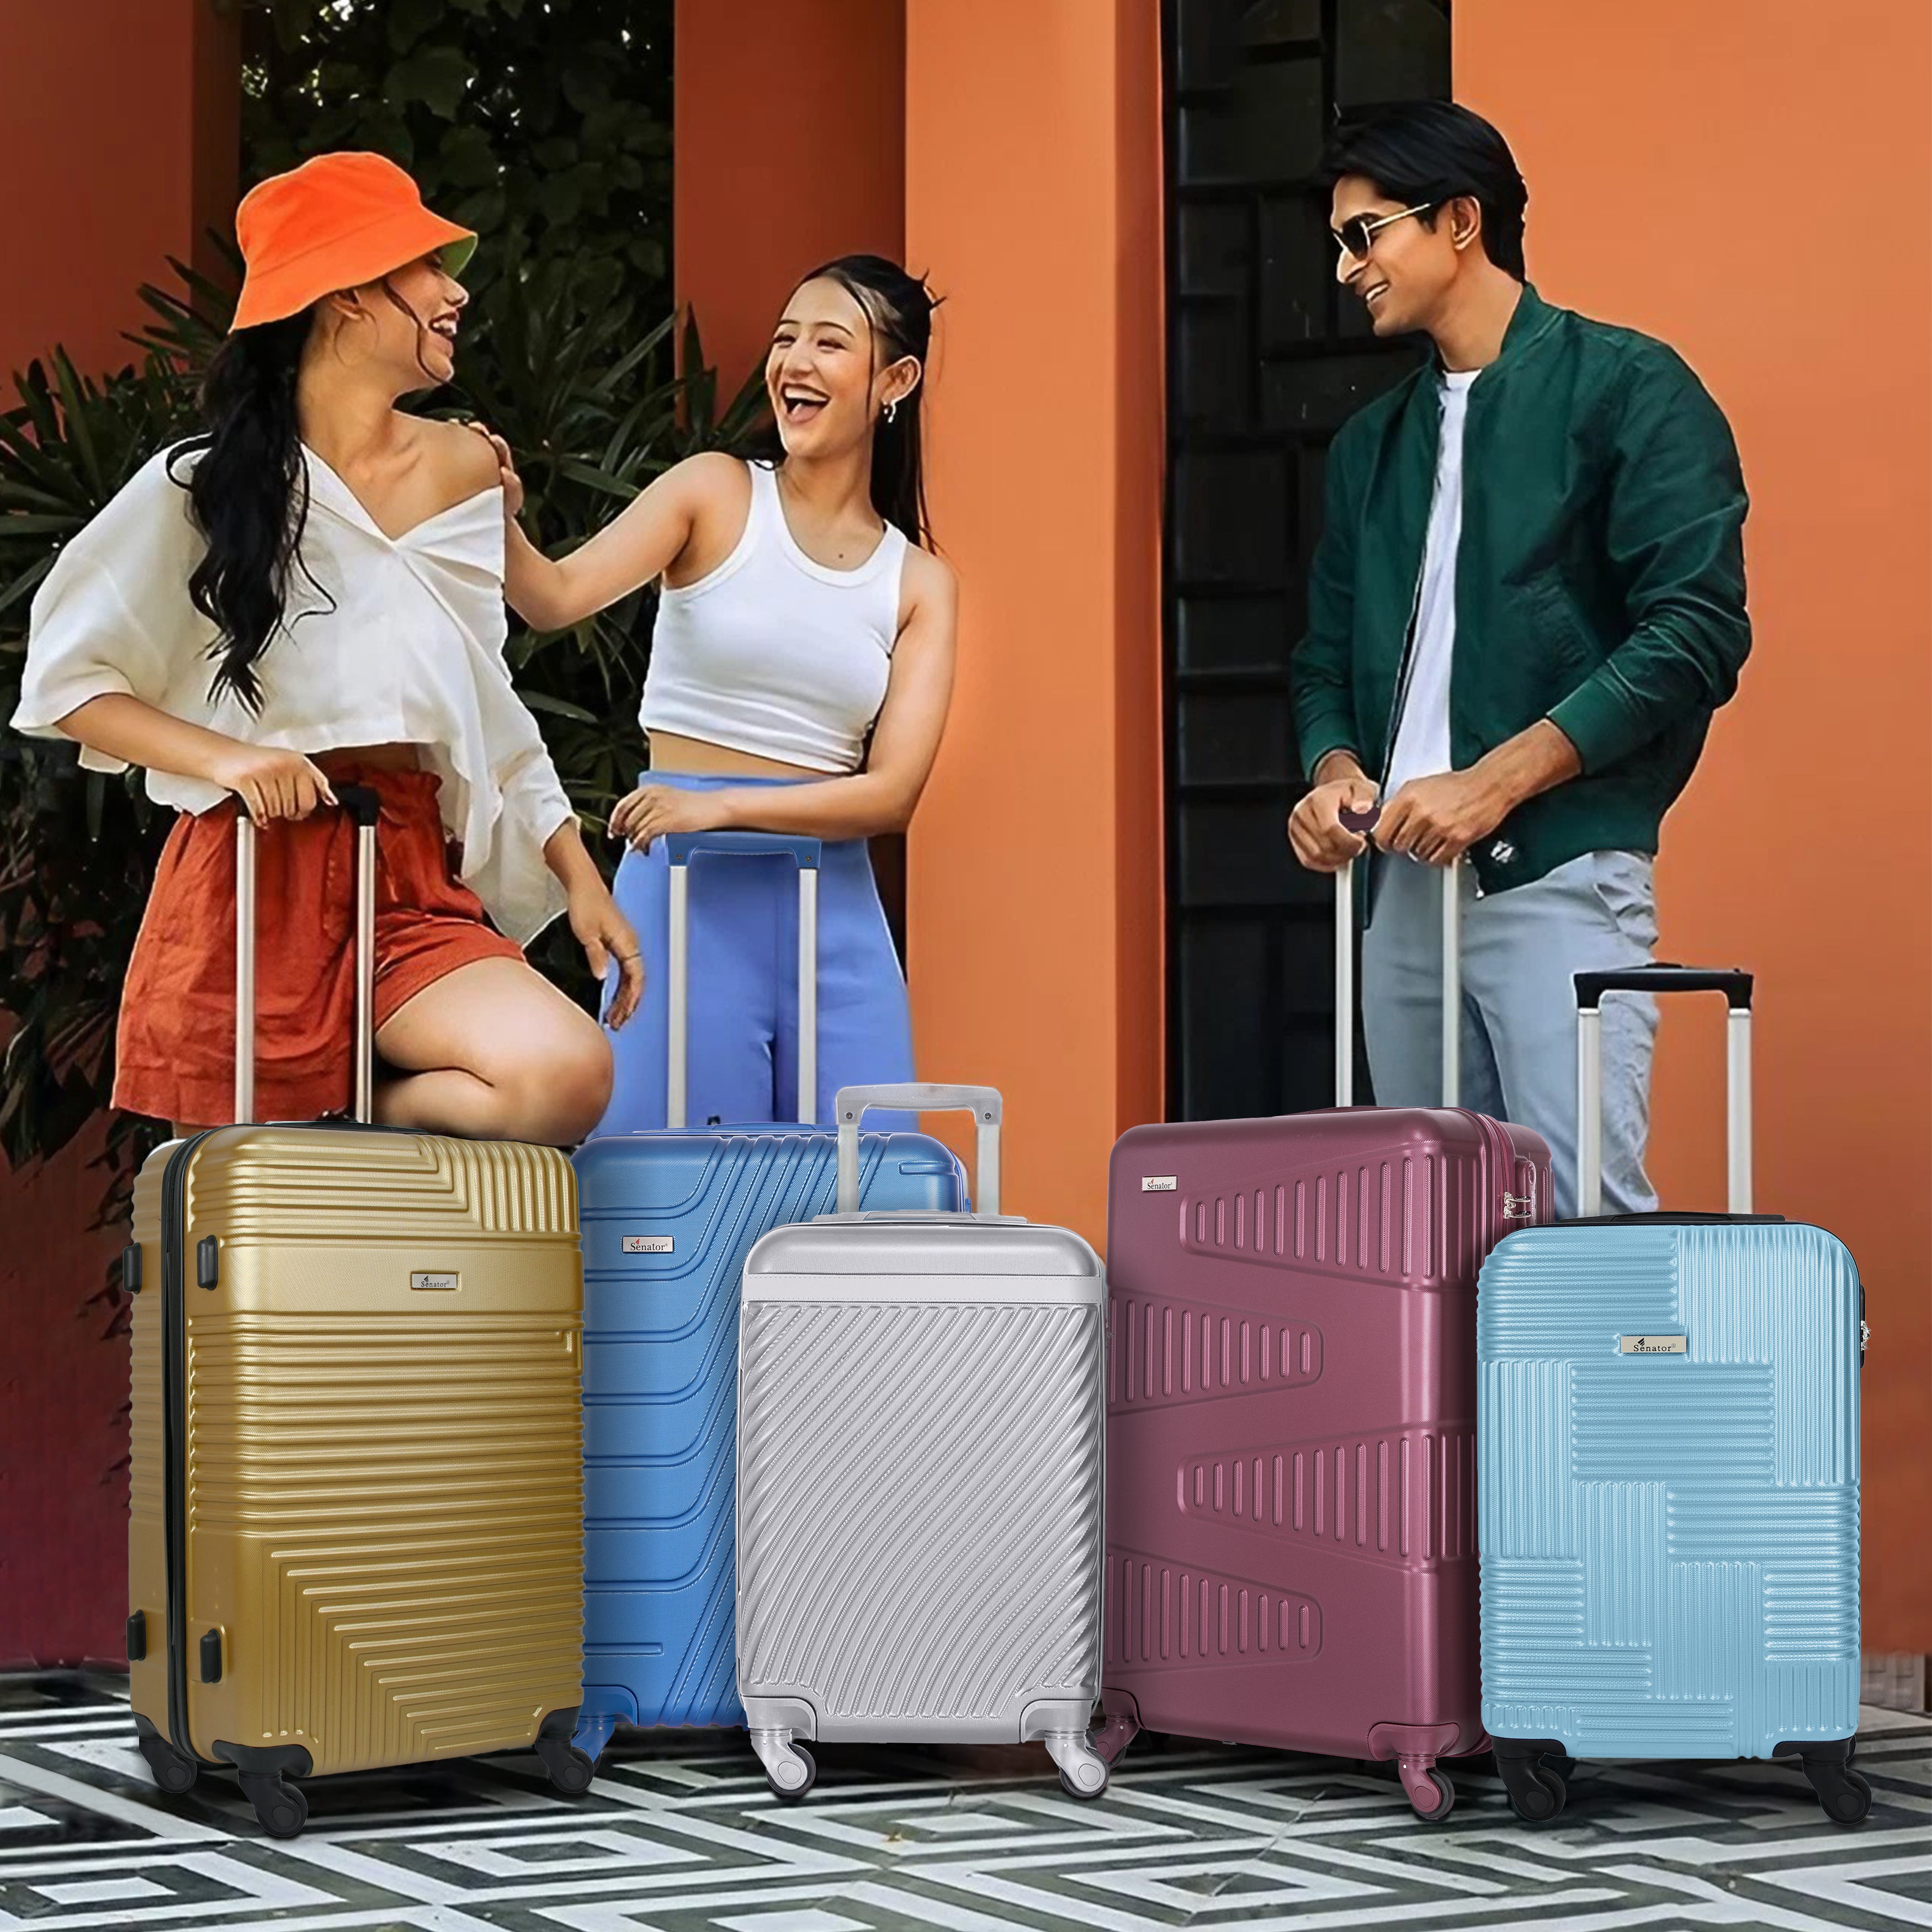 Luggage Trolley offers | Travel Luggage | Luggage Bag